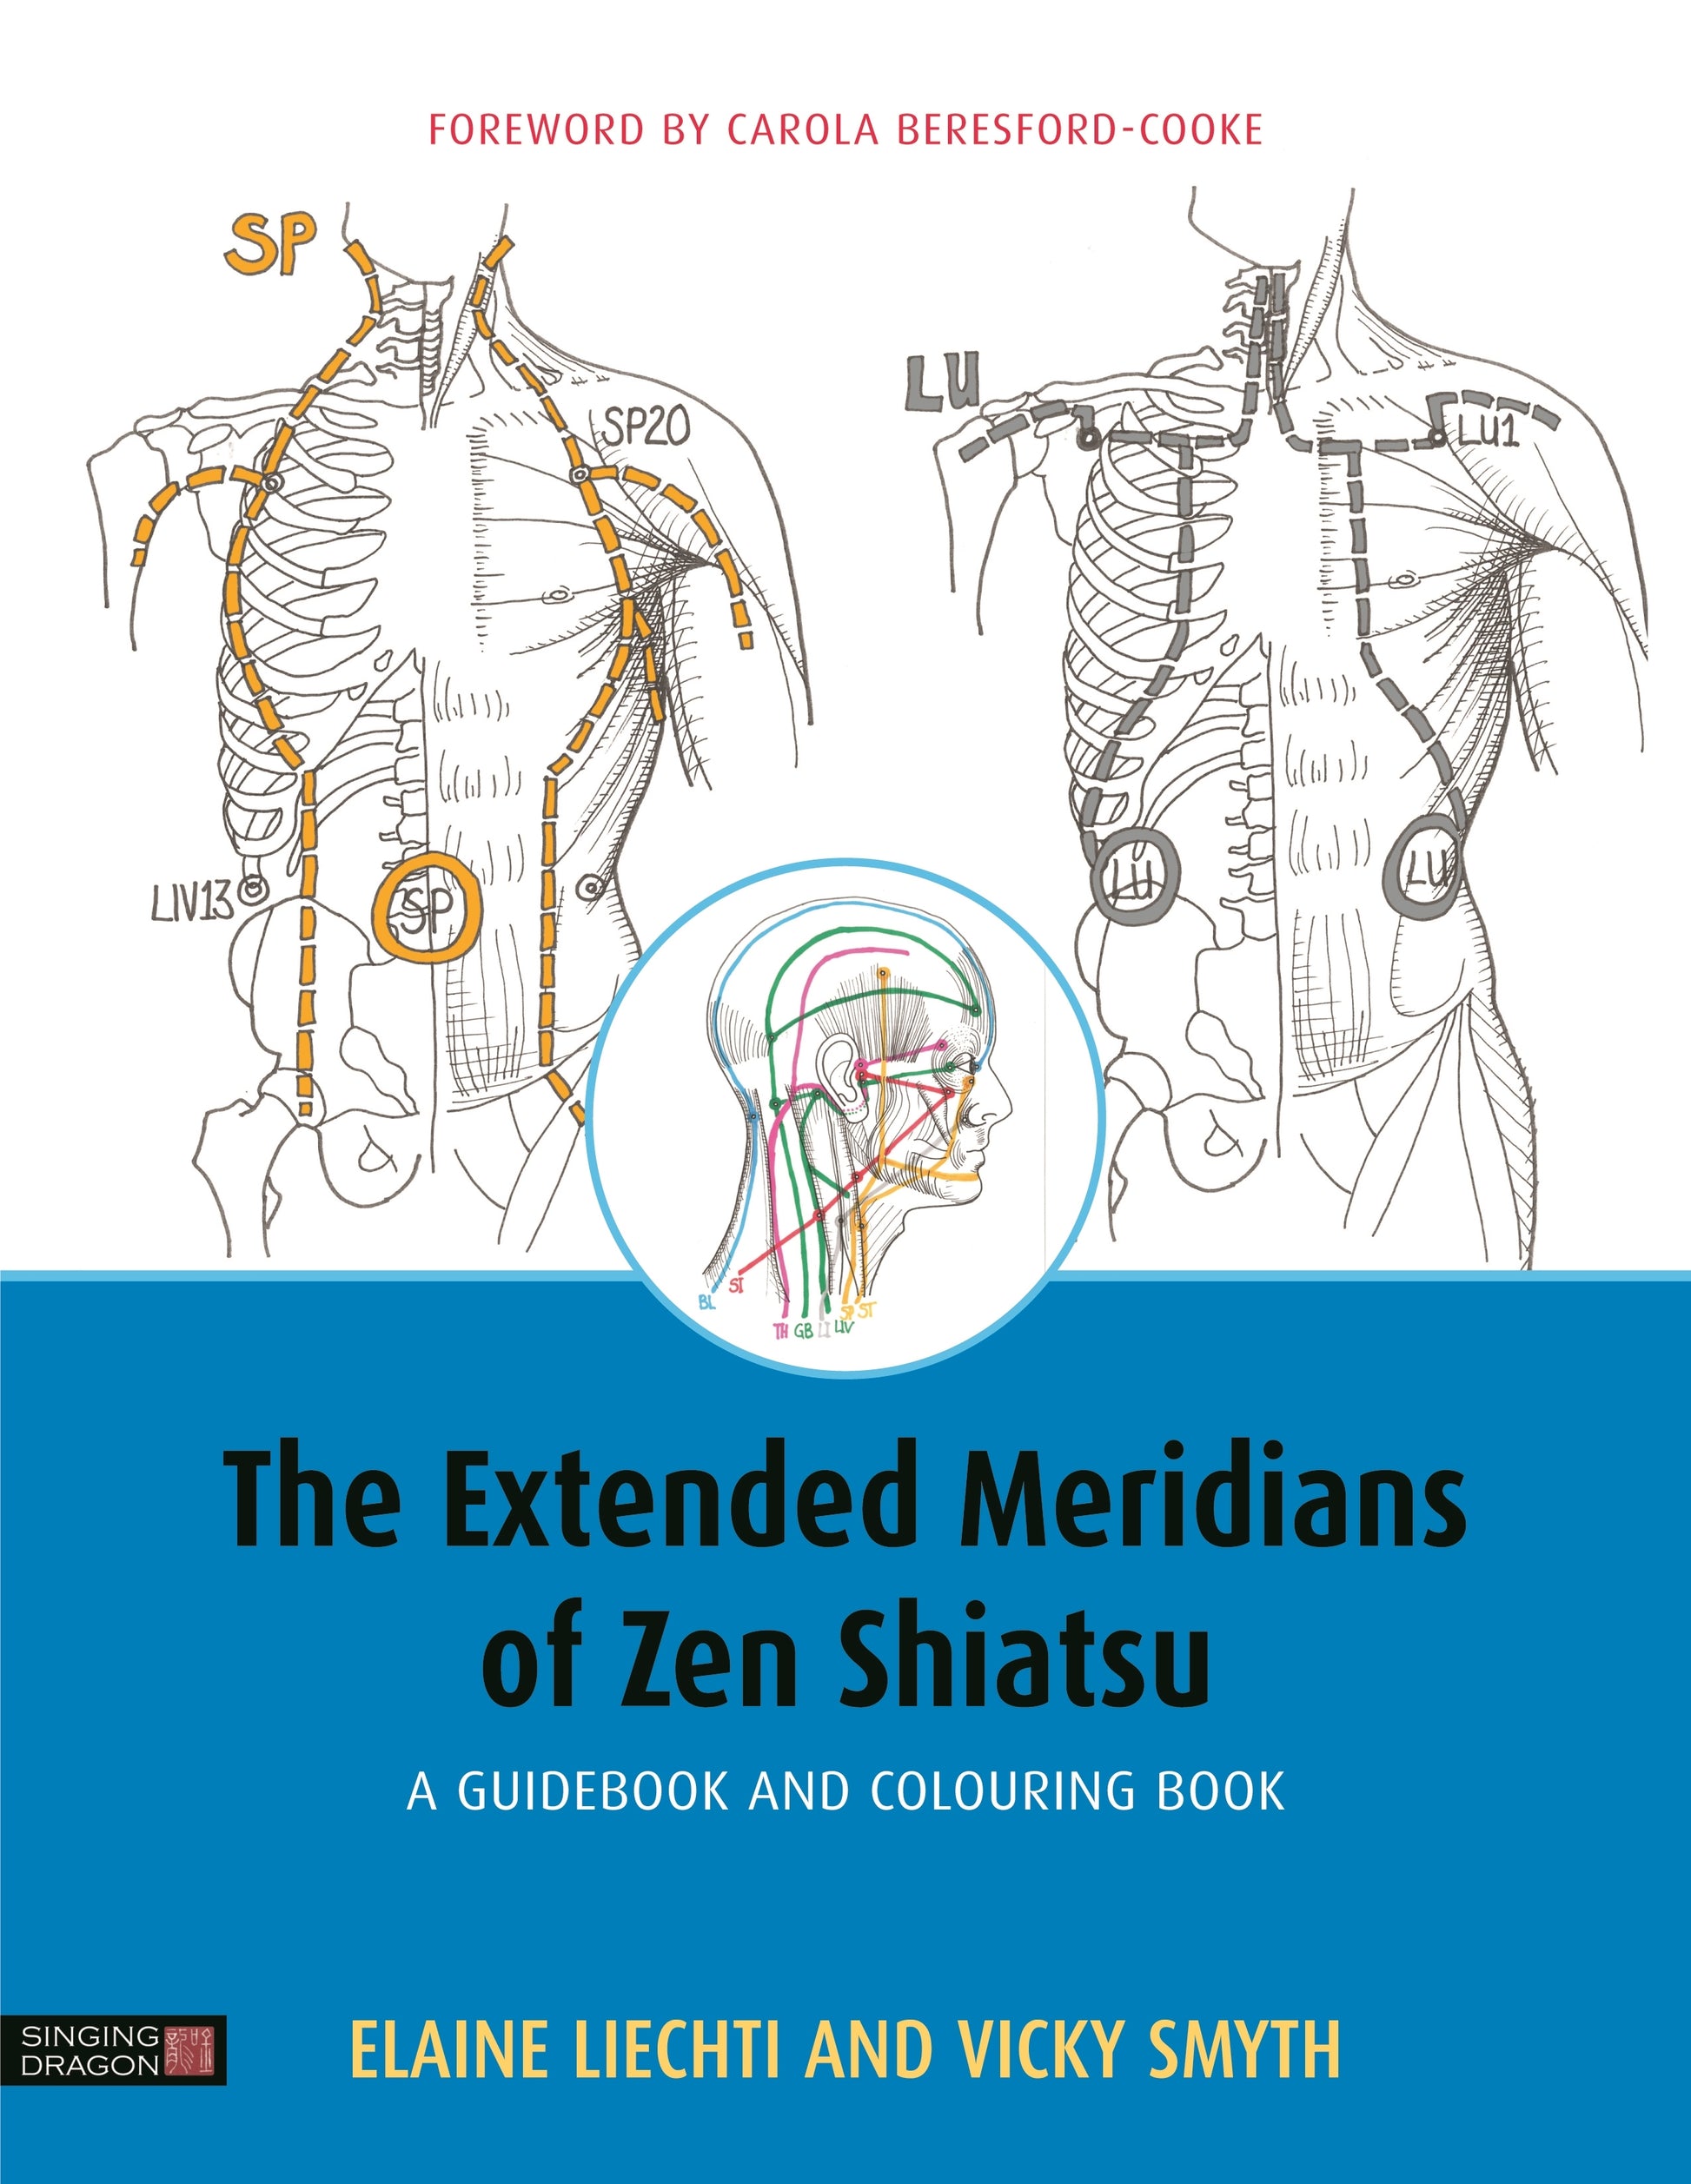 The Extended Meridians of Zen Shiatsu by Elaine Liechti, Vicky Smyth, Carola Beresford-Cooke